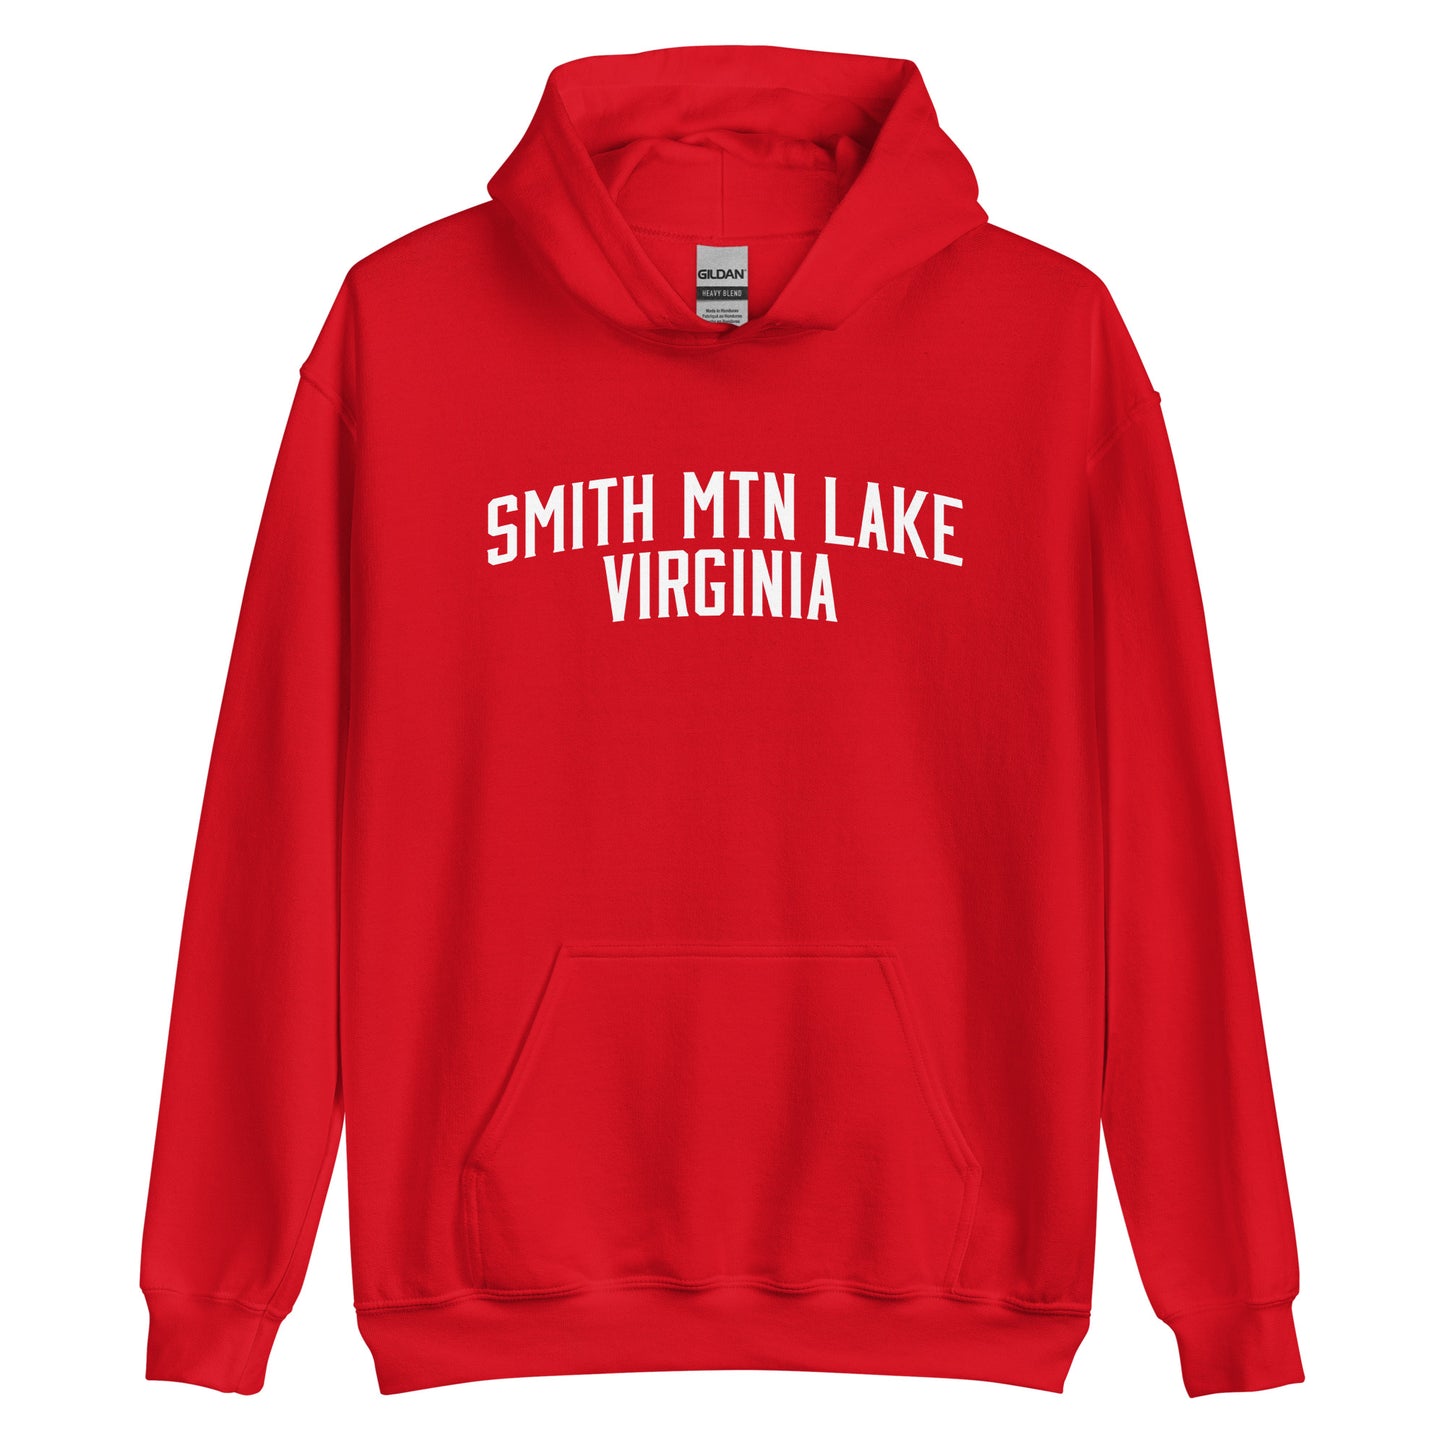 Smith Mountain Lake Virginia Arch Type Unisex Hoodie Sweatshirt